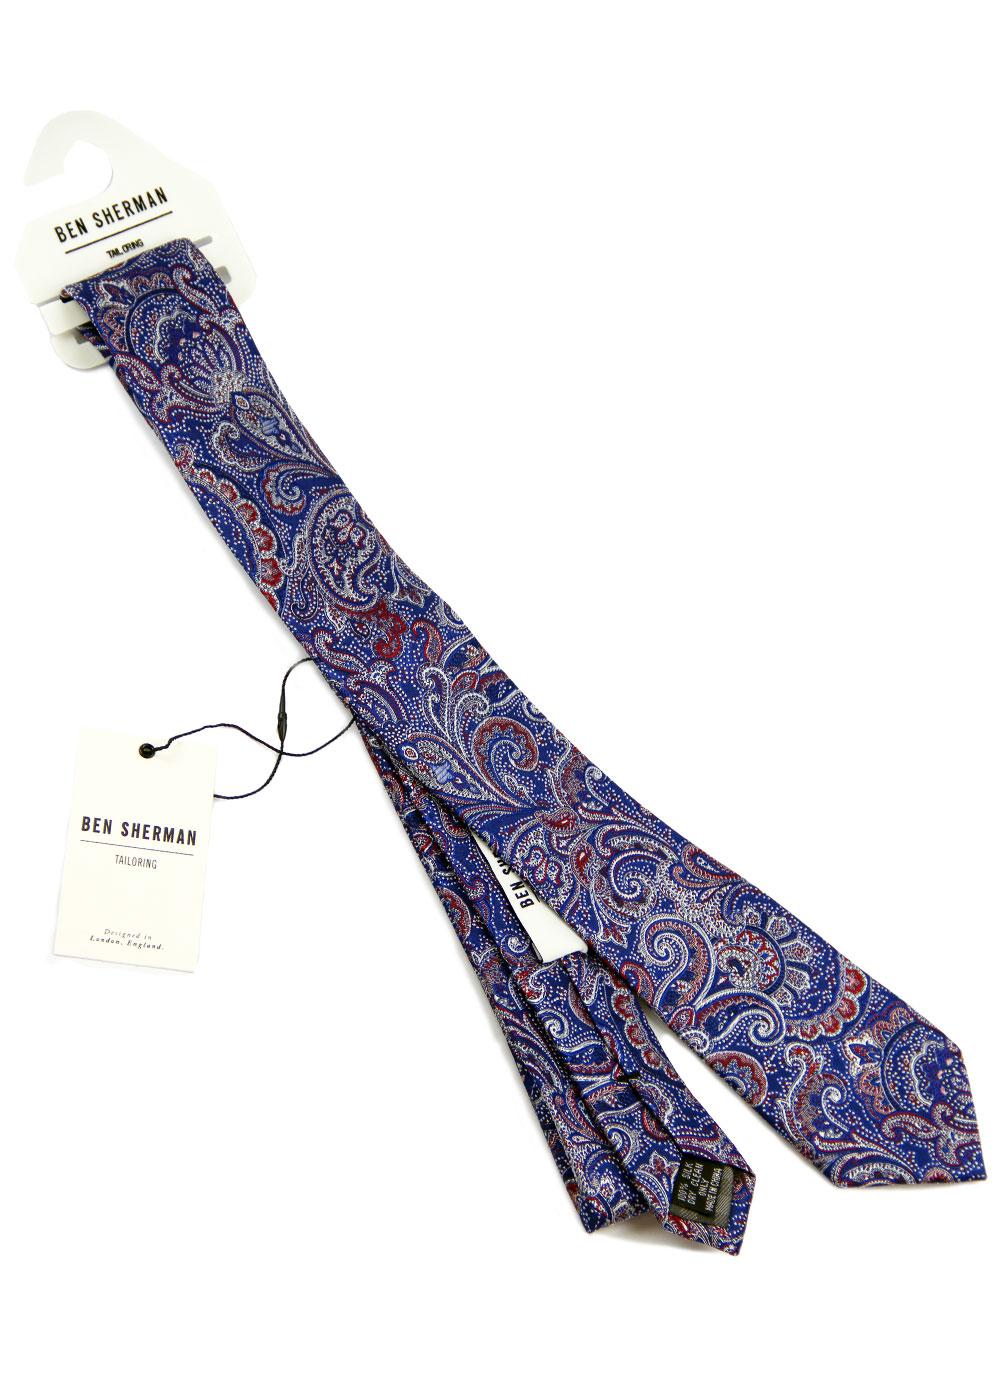 Ben Sherman Tailoring Retro 60s Mod Paisley Tie in Blue/Red